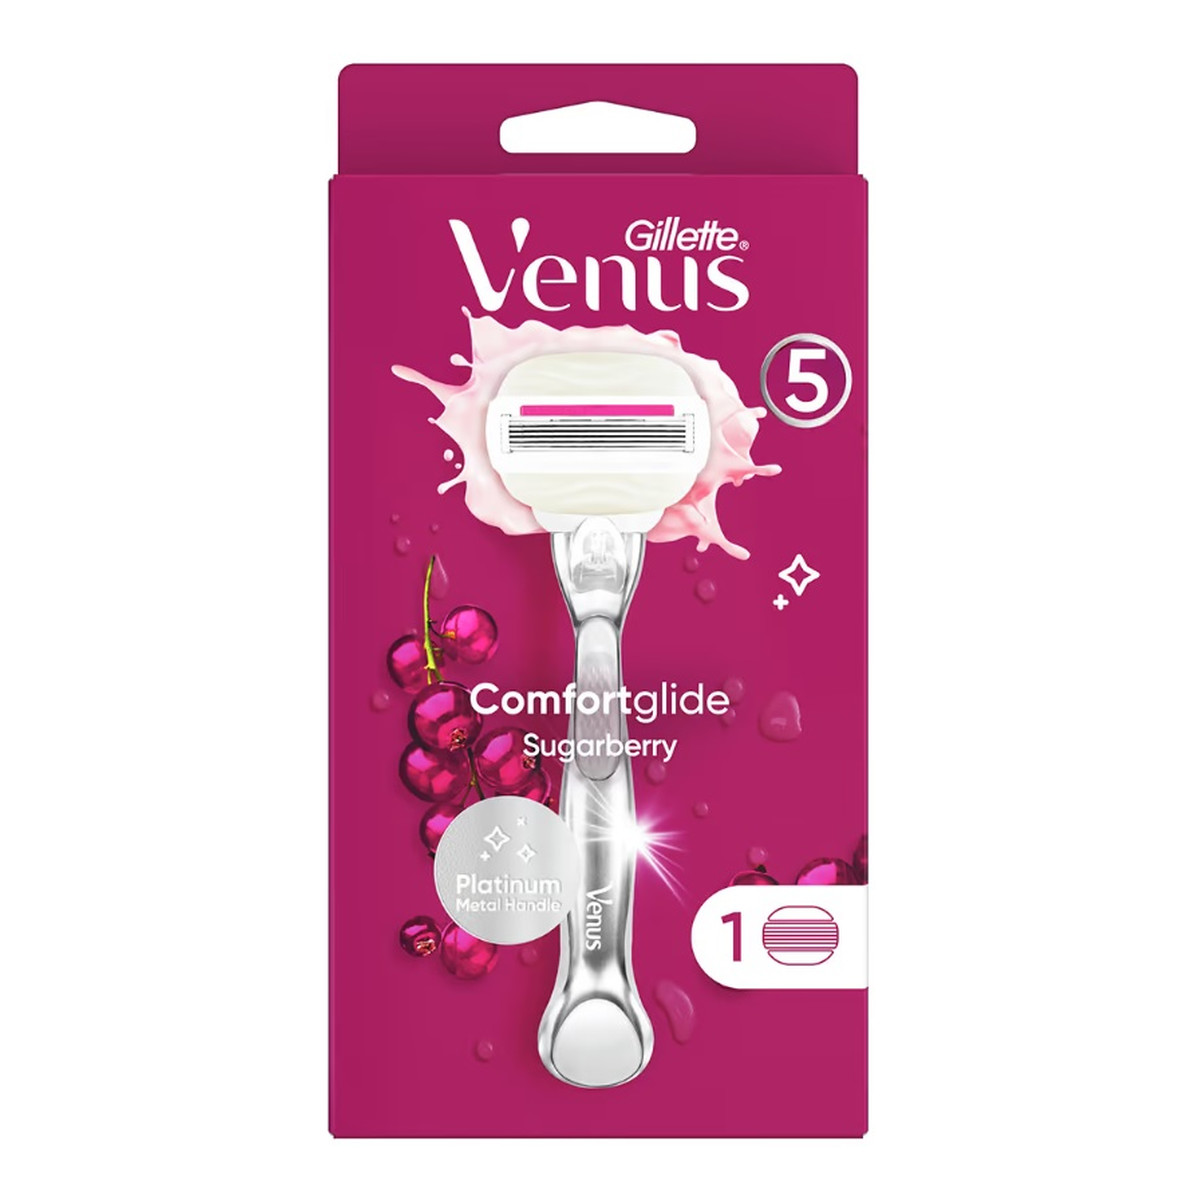 Gillette Venus comfortglide sugarberry maszynka do golenia